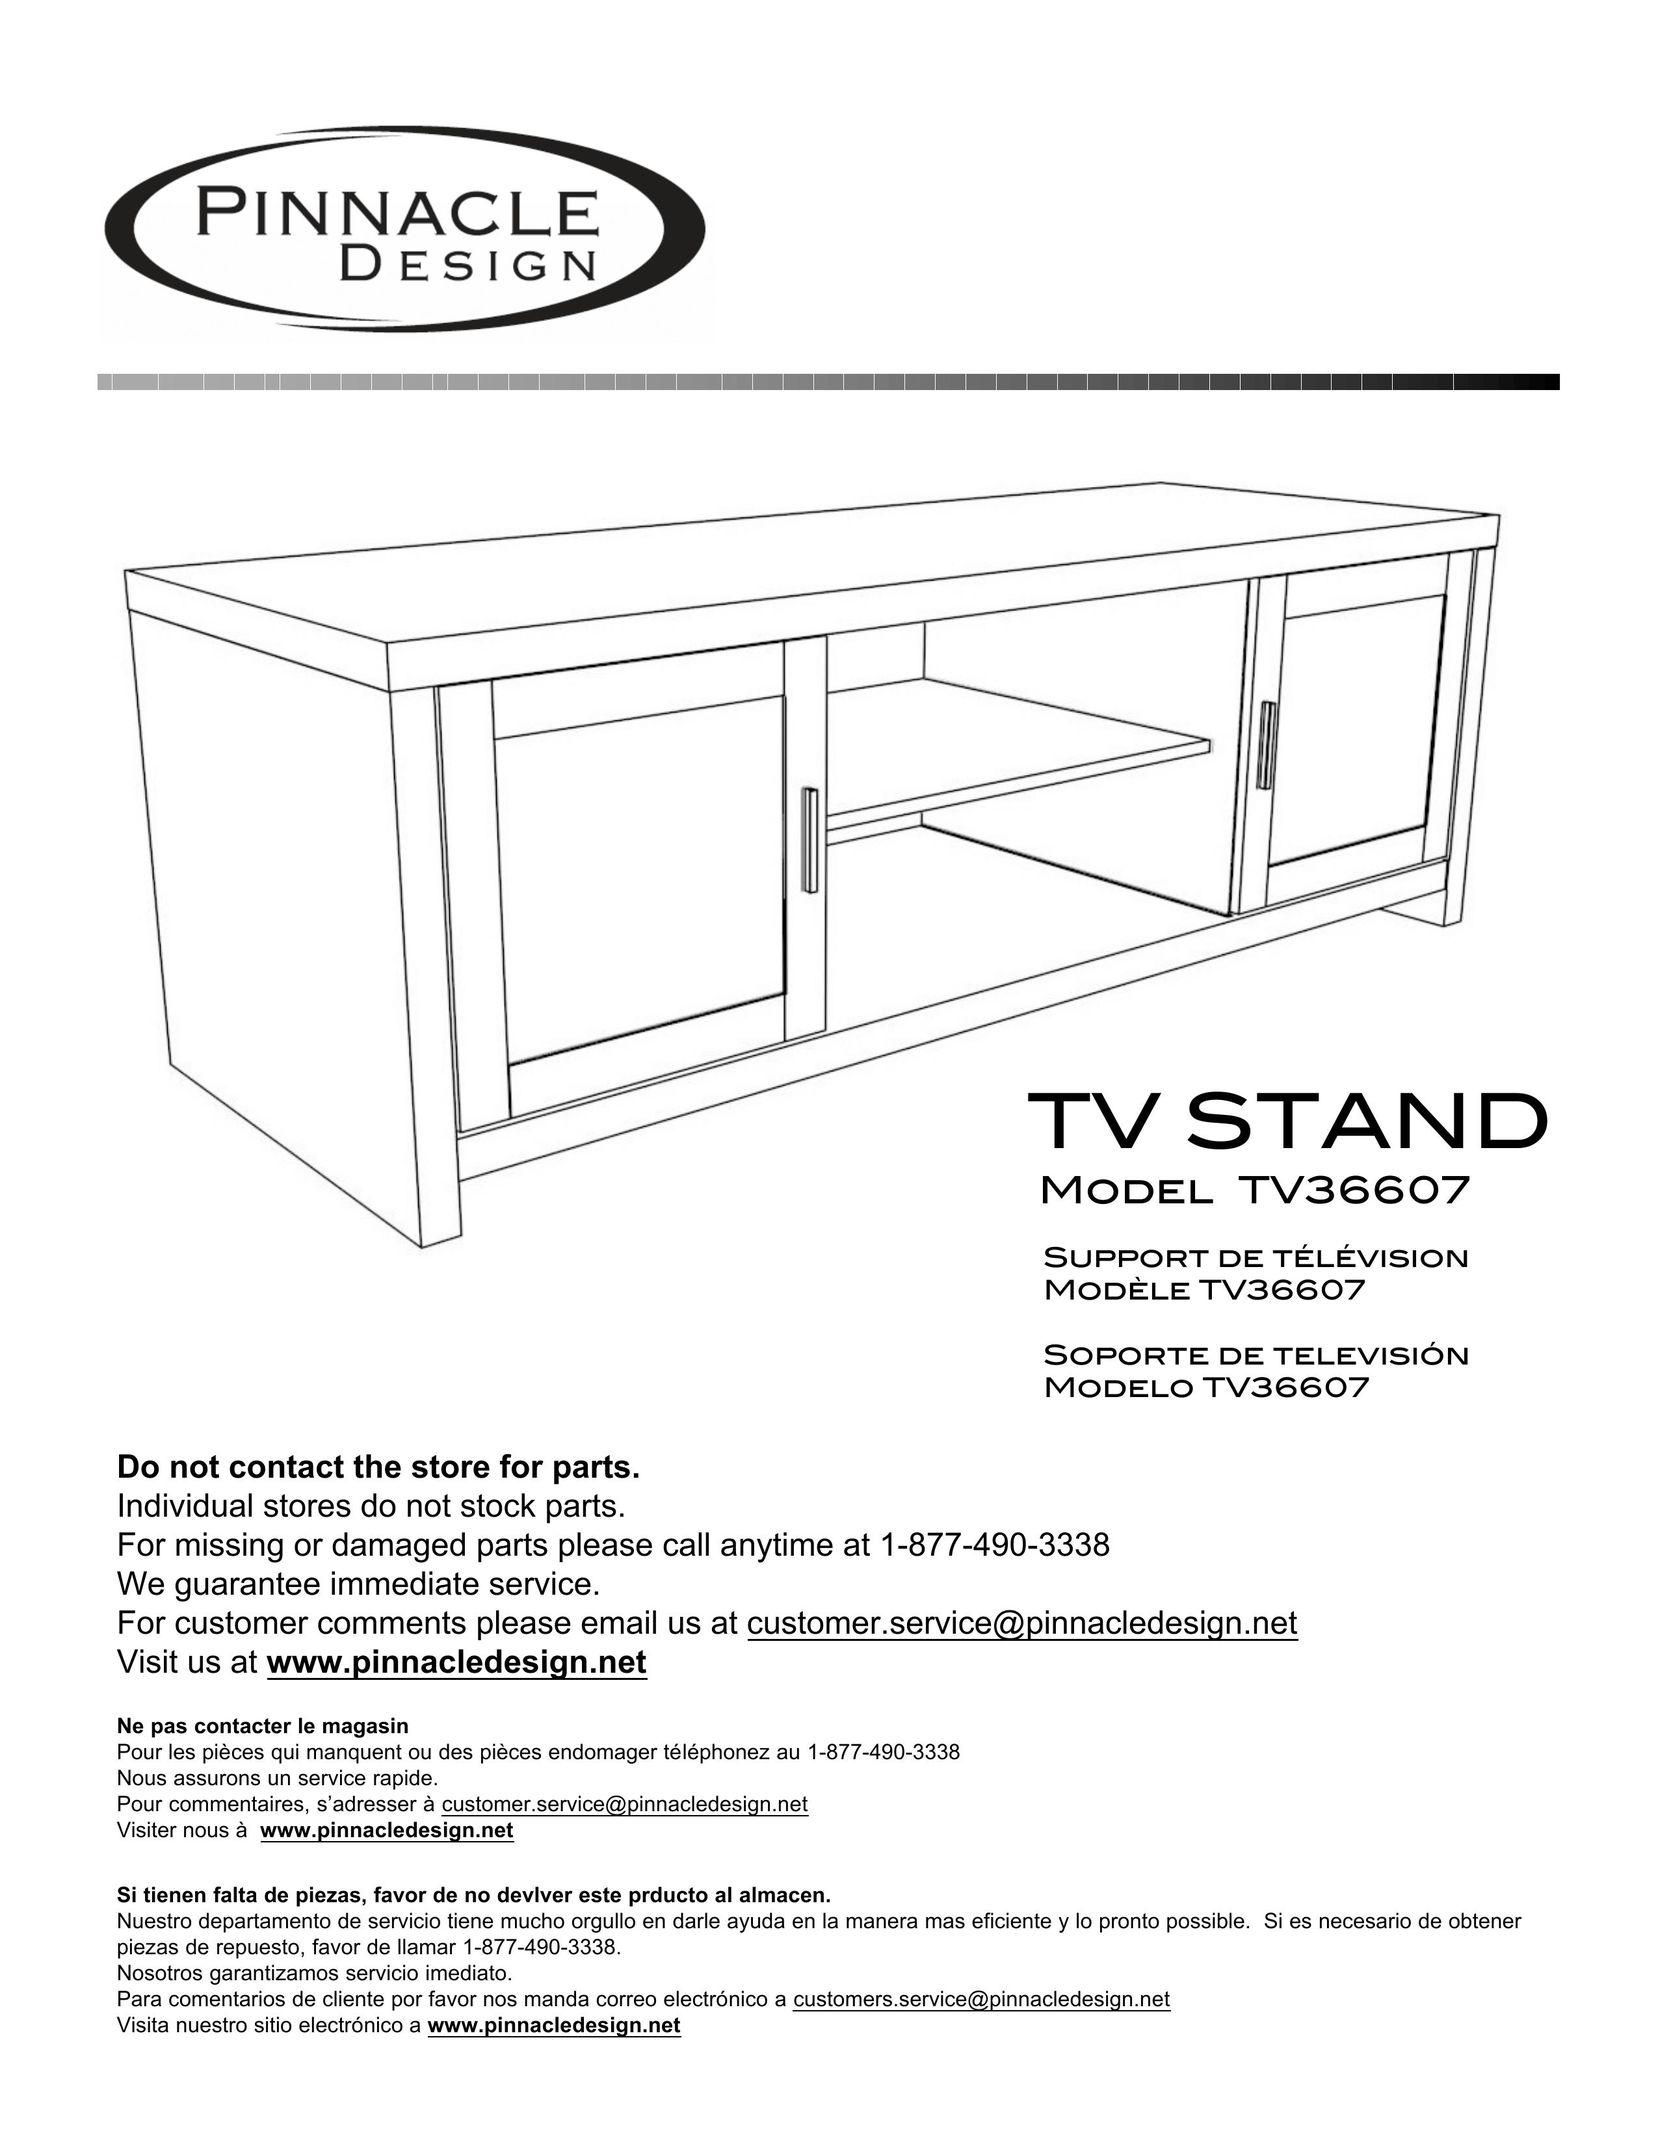 Pinnacle Design TV36607 TV Video Accessories User Manual